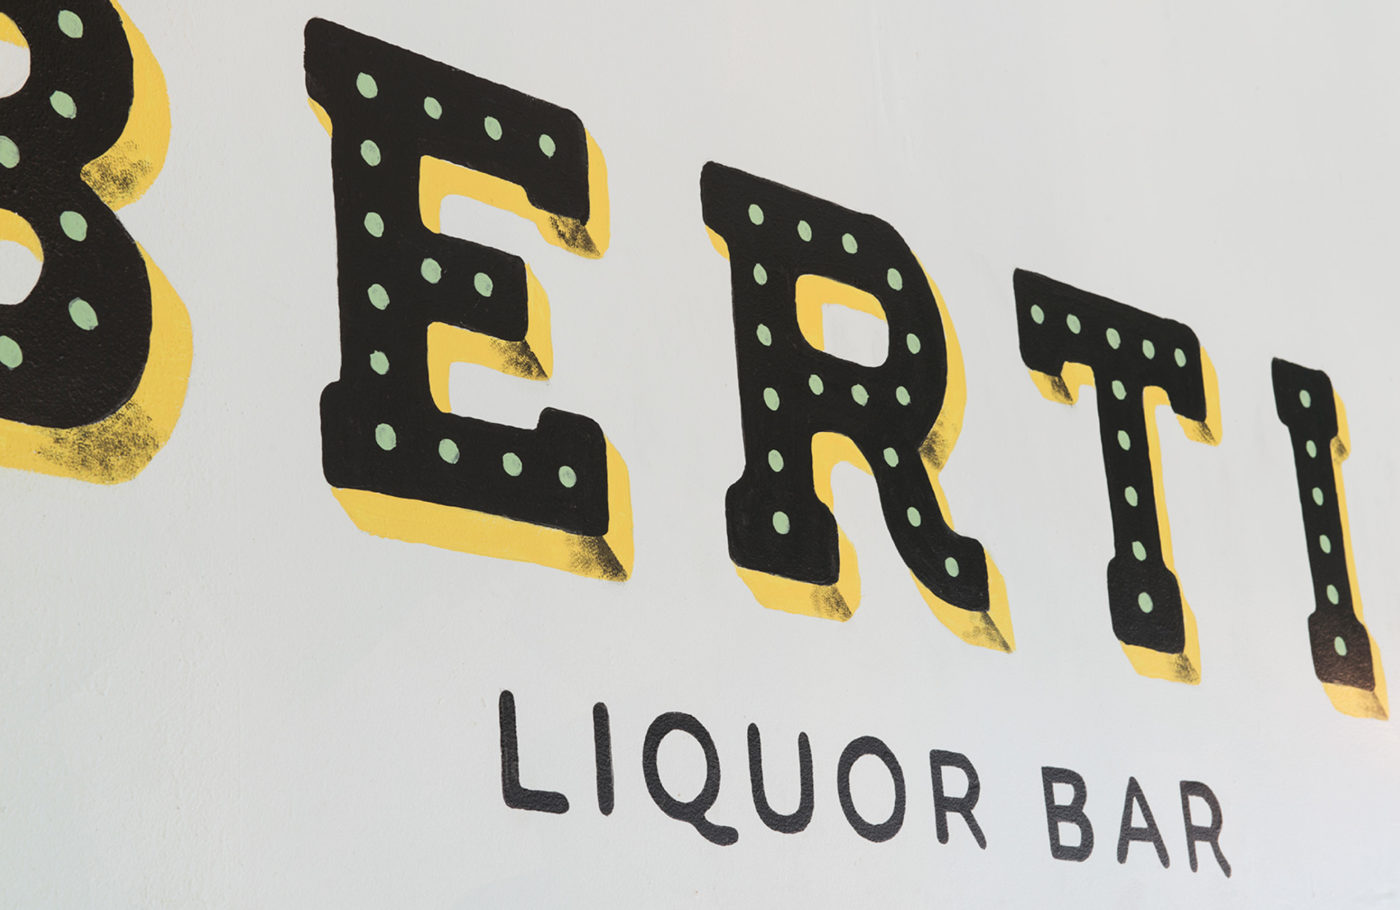 Libertine Liquor Bar Branding by CODO Design.